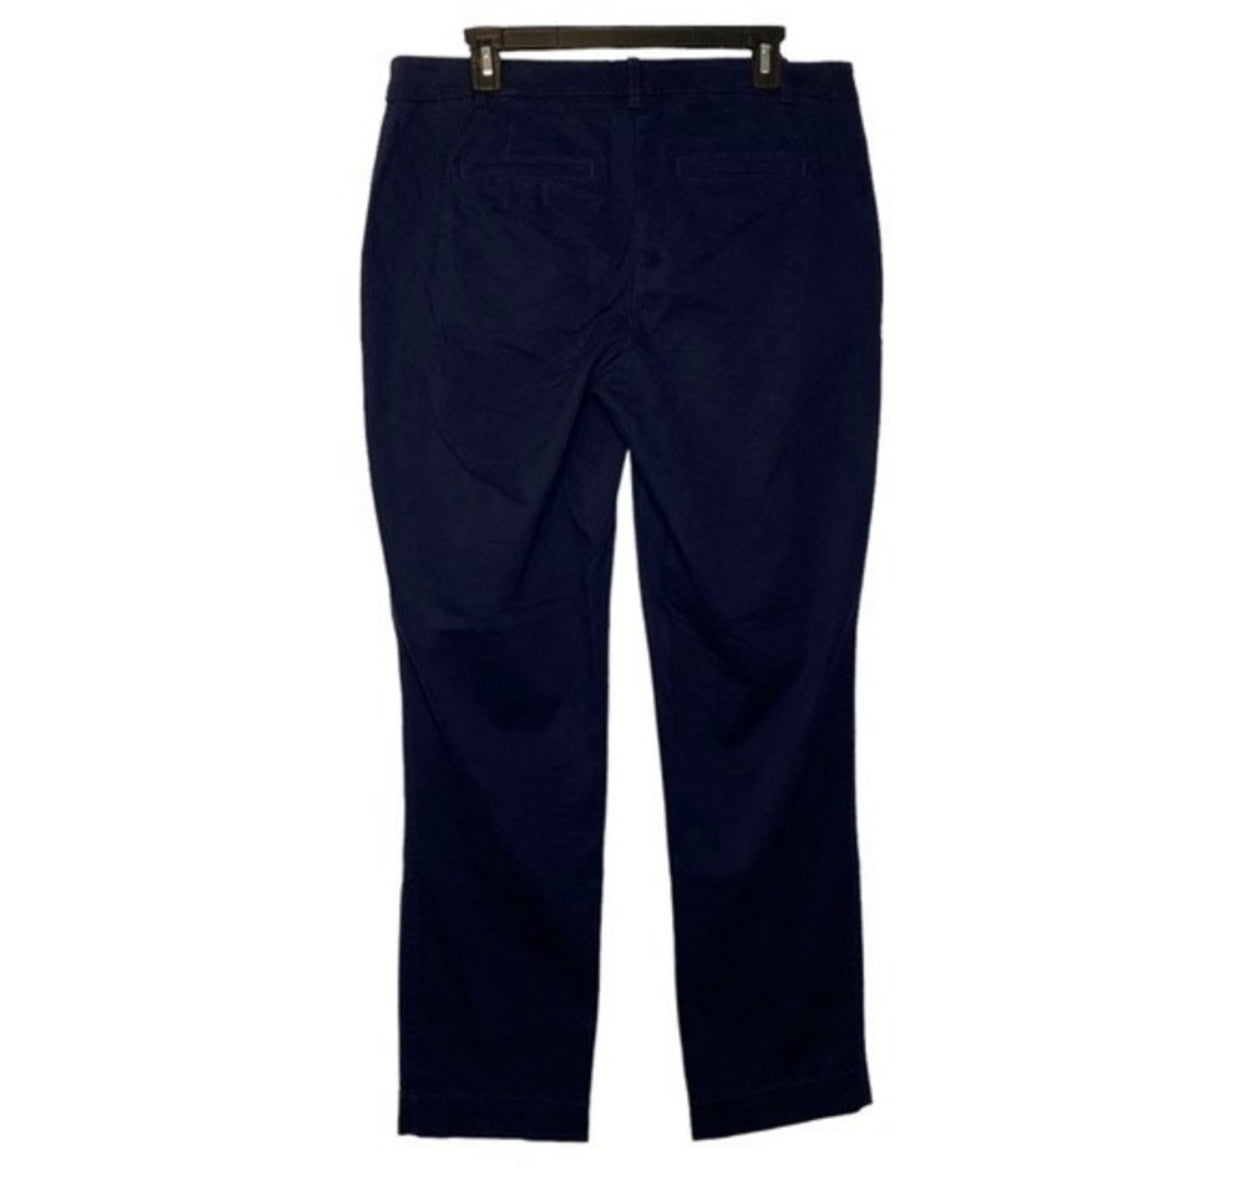 TALBOTS Navy Blue Chino Pants - Size 8